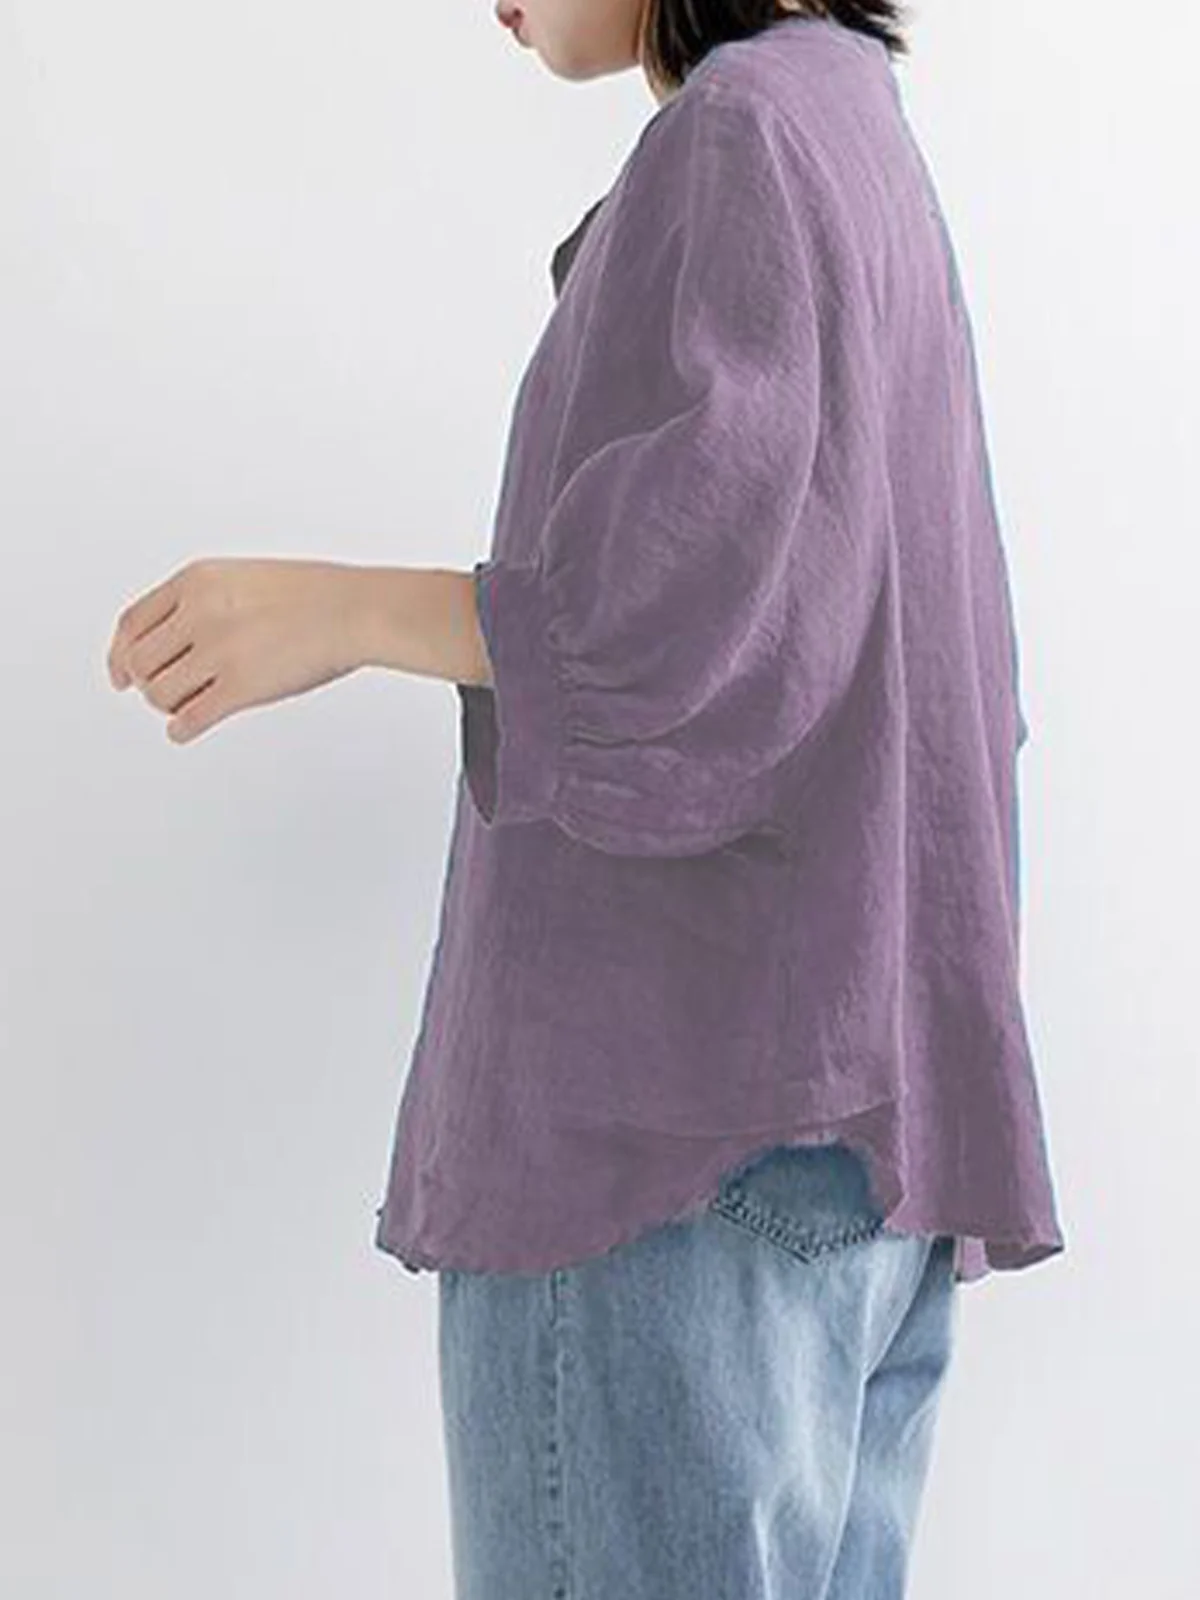 Women's Shirt Blouse Basic Linen Tops Solid Color Plain Bat Sleeve Casual Daily Vintage Basic Shirts